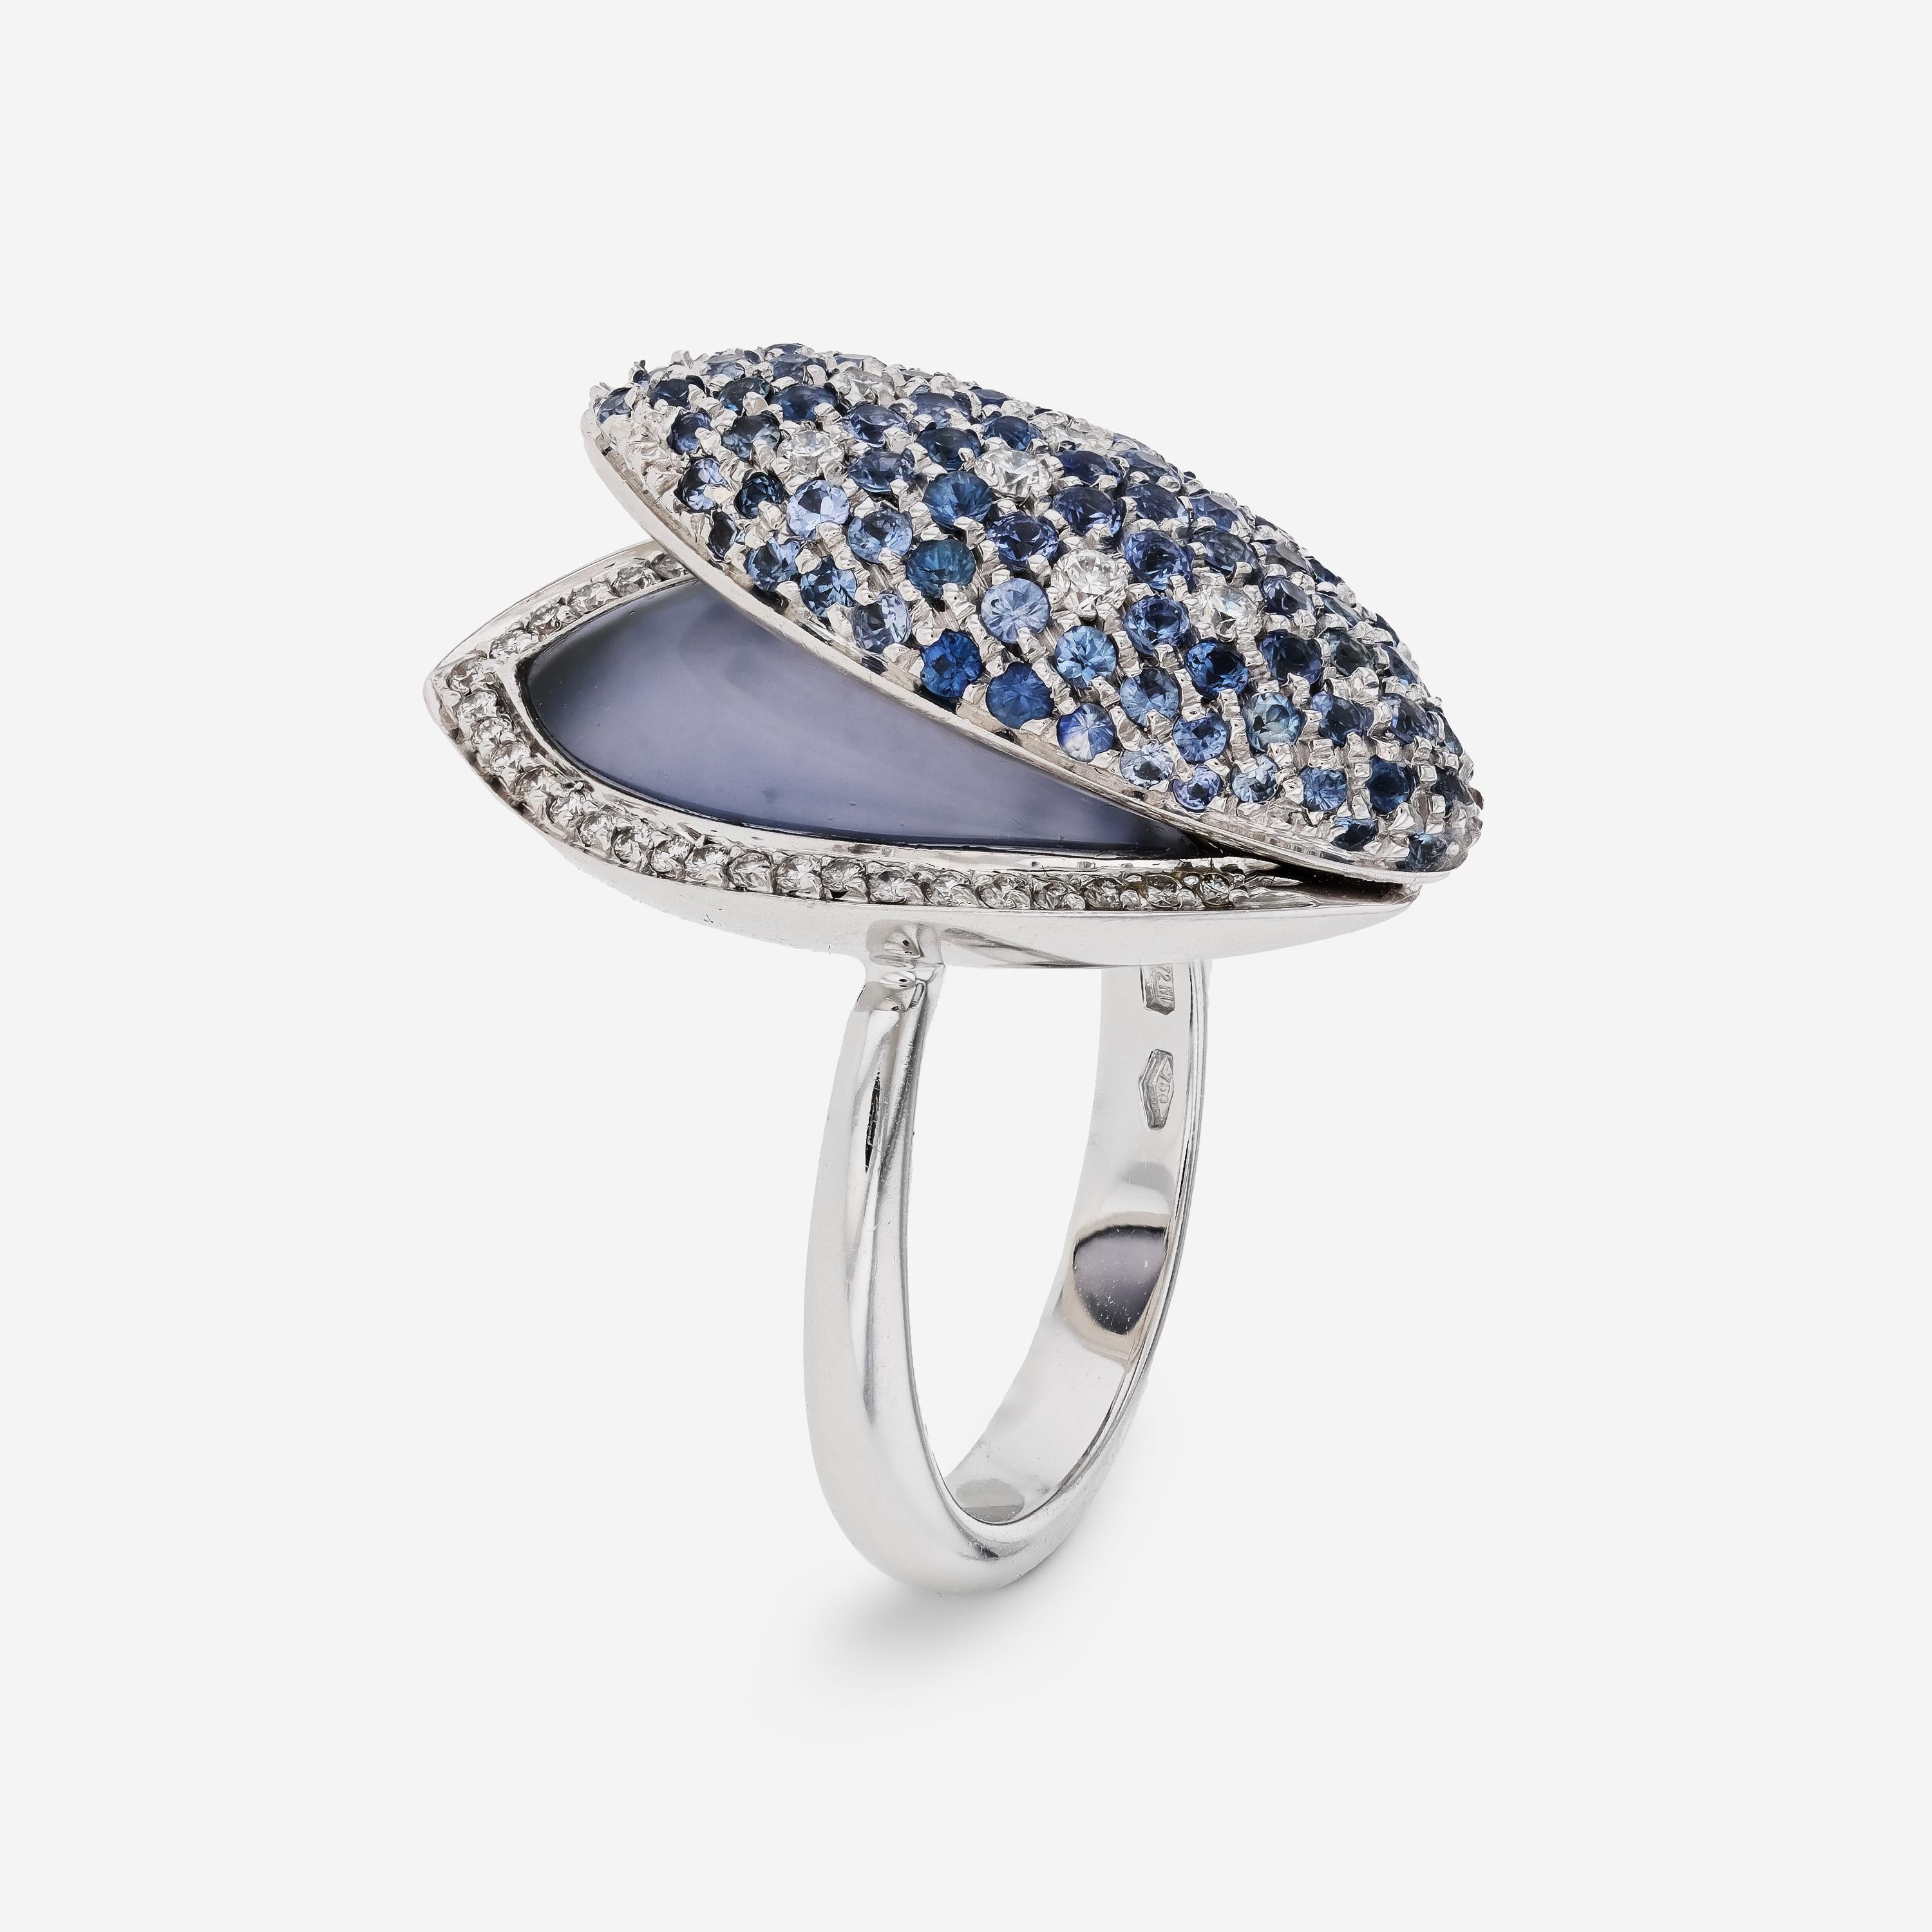 Contemporary Zydo 18K White Gold, Sapphire & Diamond Ring sz 6.75 For Sale